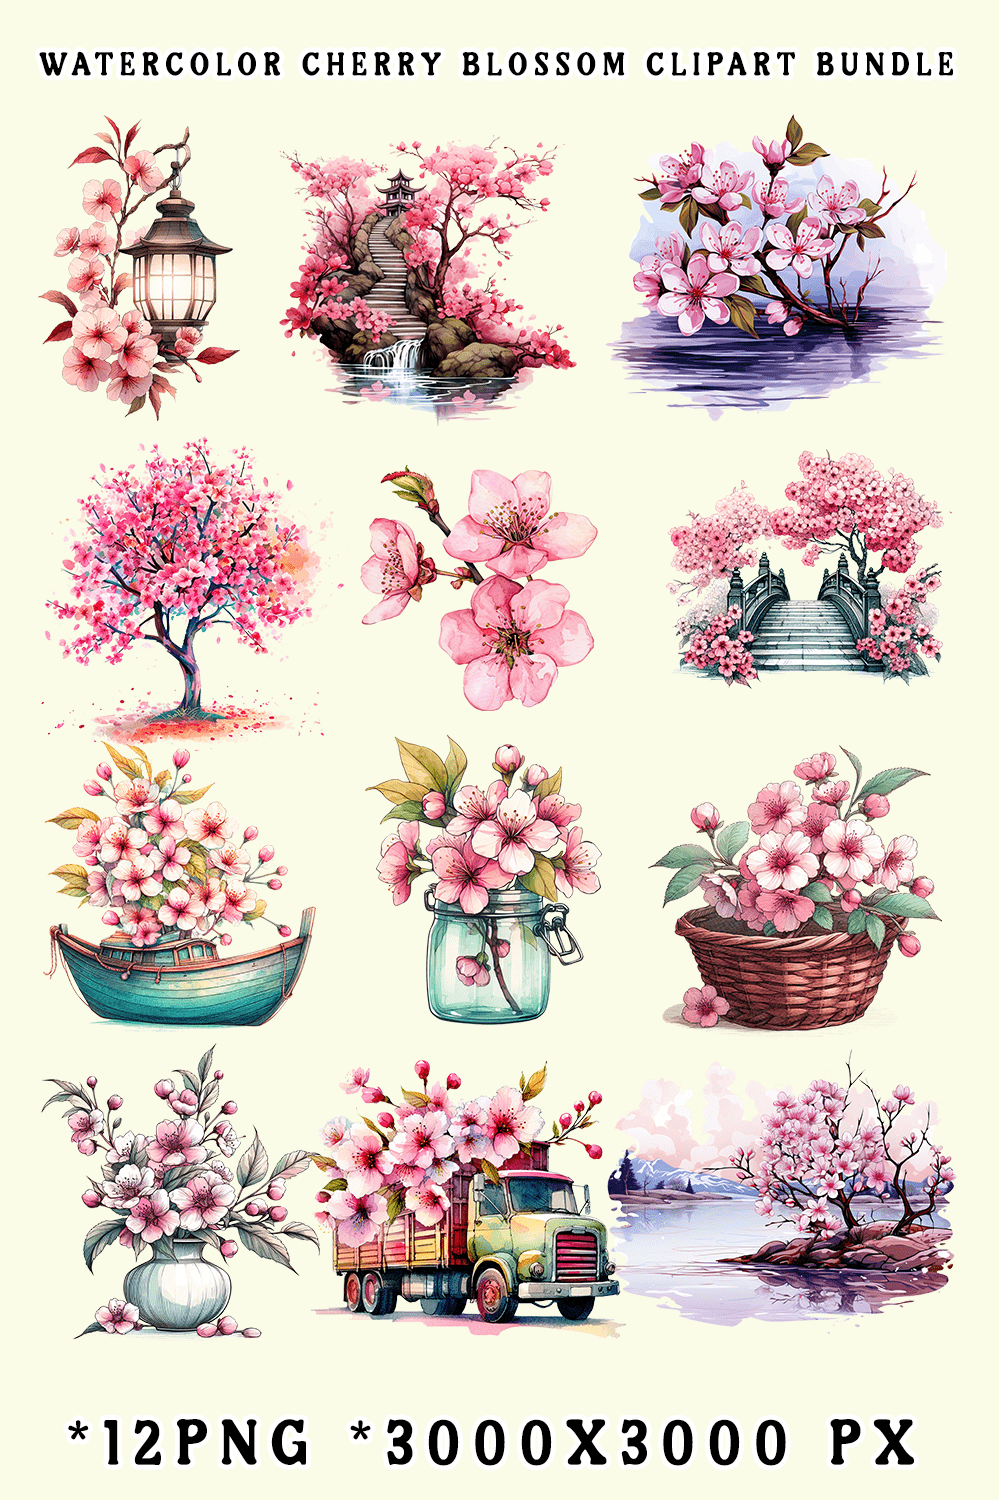 Watercolor Cherry Blossom Clipart Bundle pinterest preview image.